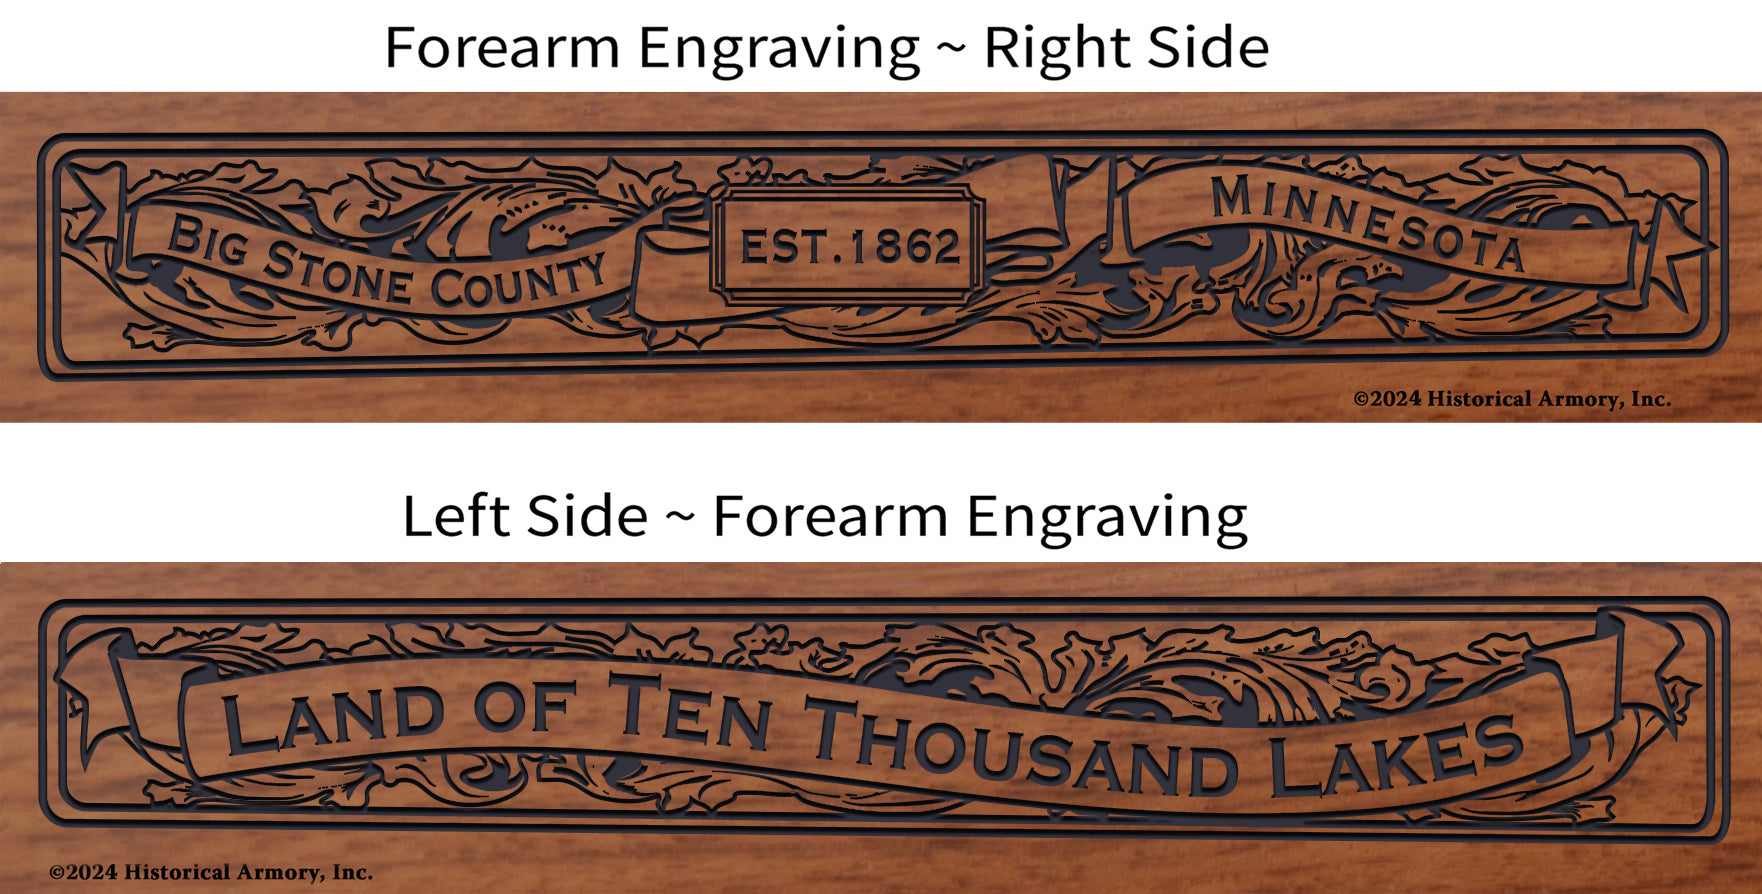 Big Stone County Minnesota Engraved Rifle Forearm